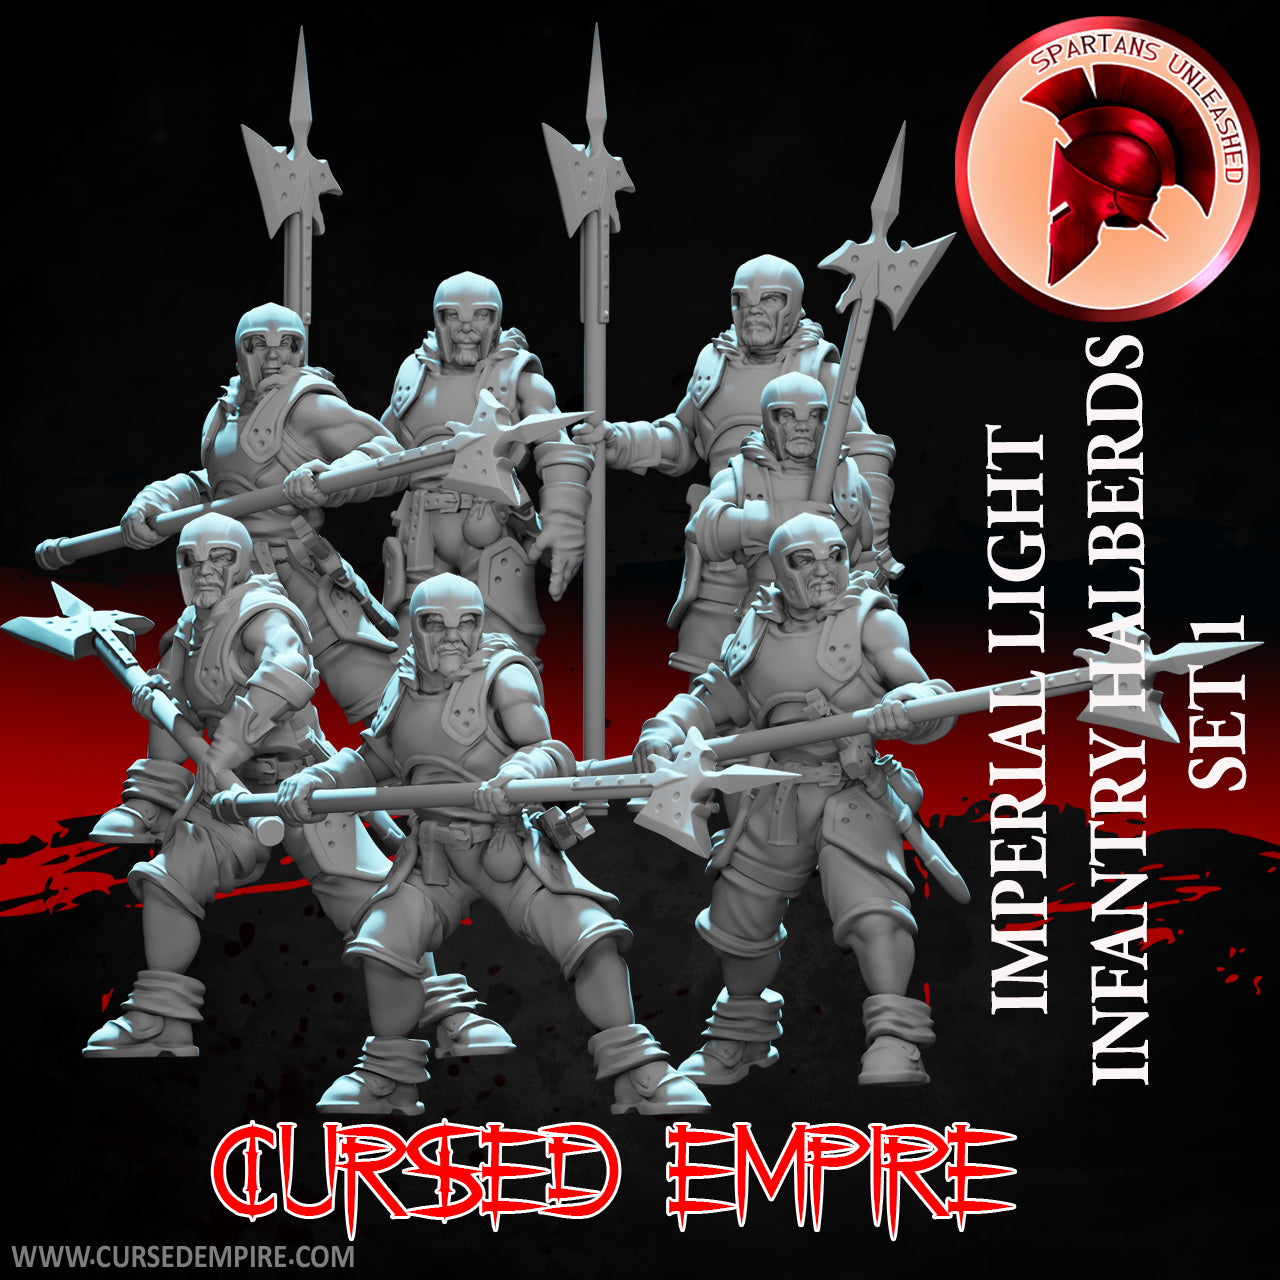 Imperial Light Infantry Halberders Set 1 - Miniatures - Set of 7